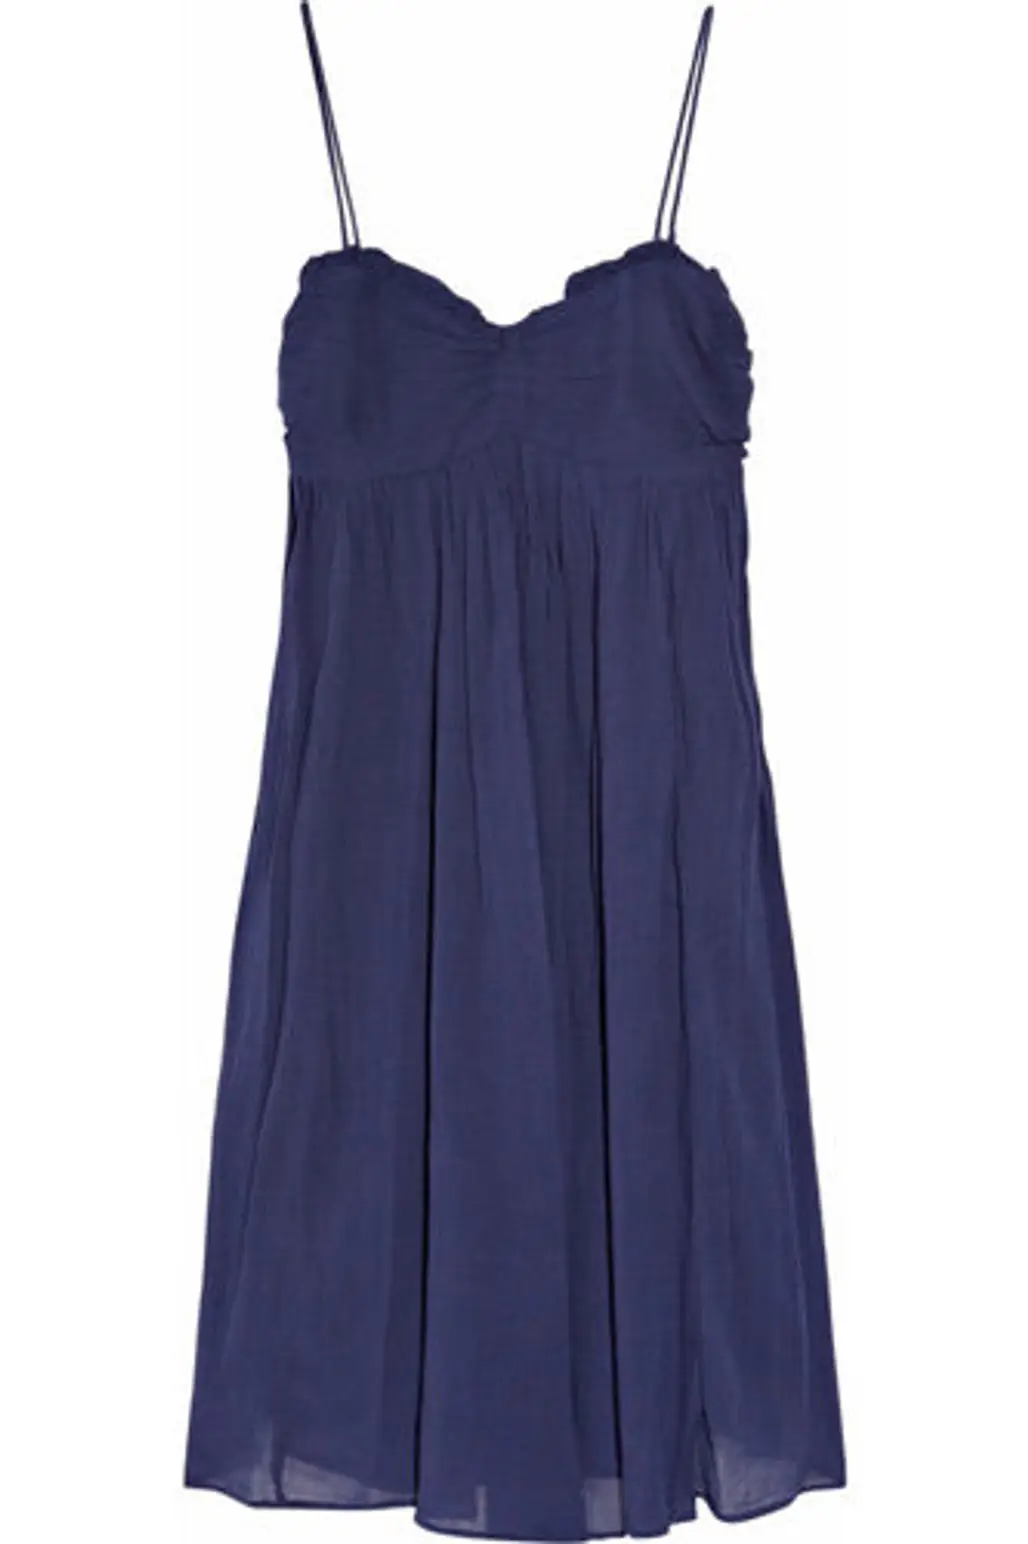 Etoile Isabel Marant ‘Kelly’ Cotton-Voile Dress